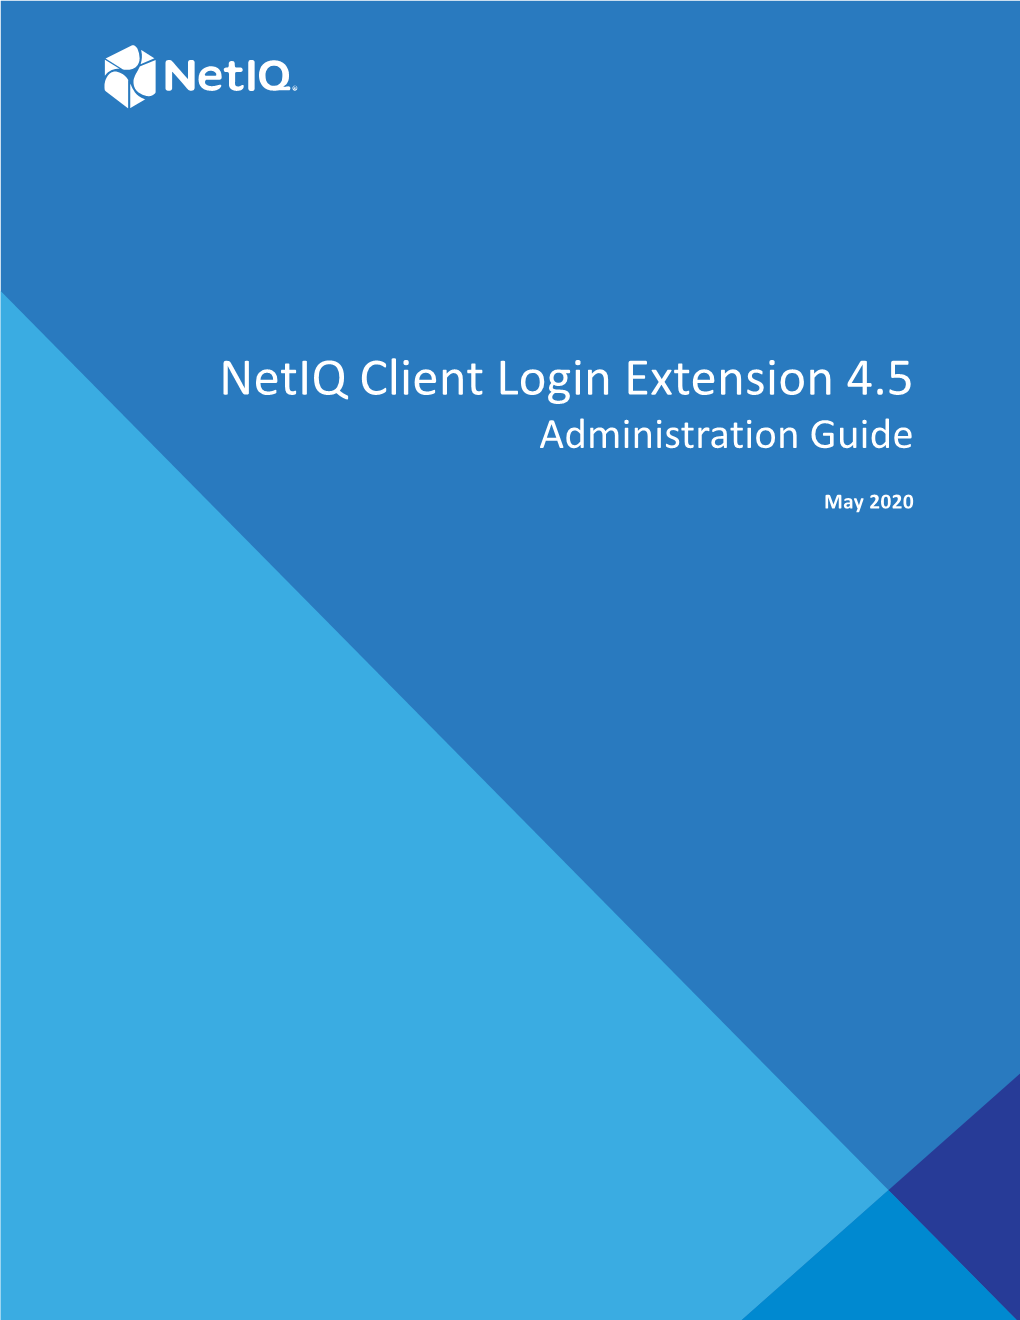 Netiq Client Login Extension Administration Guide